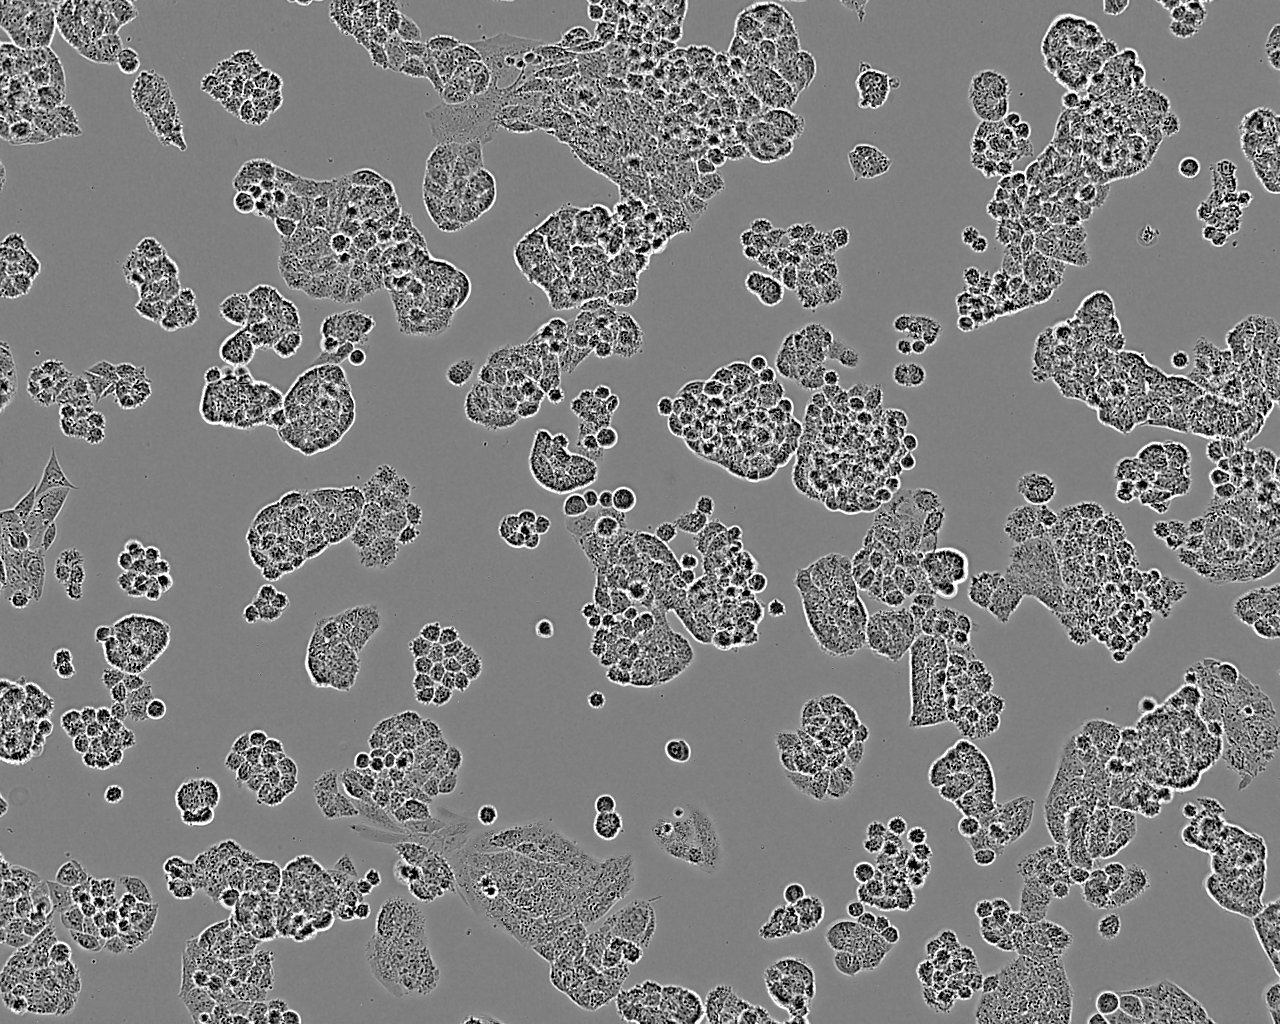 MDBK Cell:牛肾细胞系